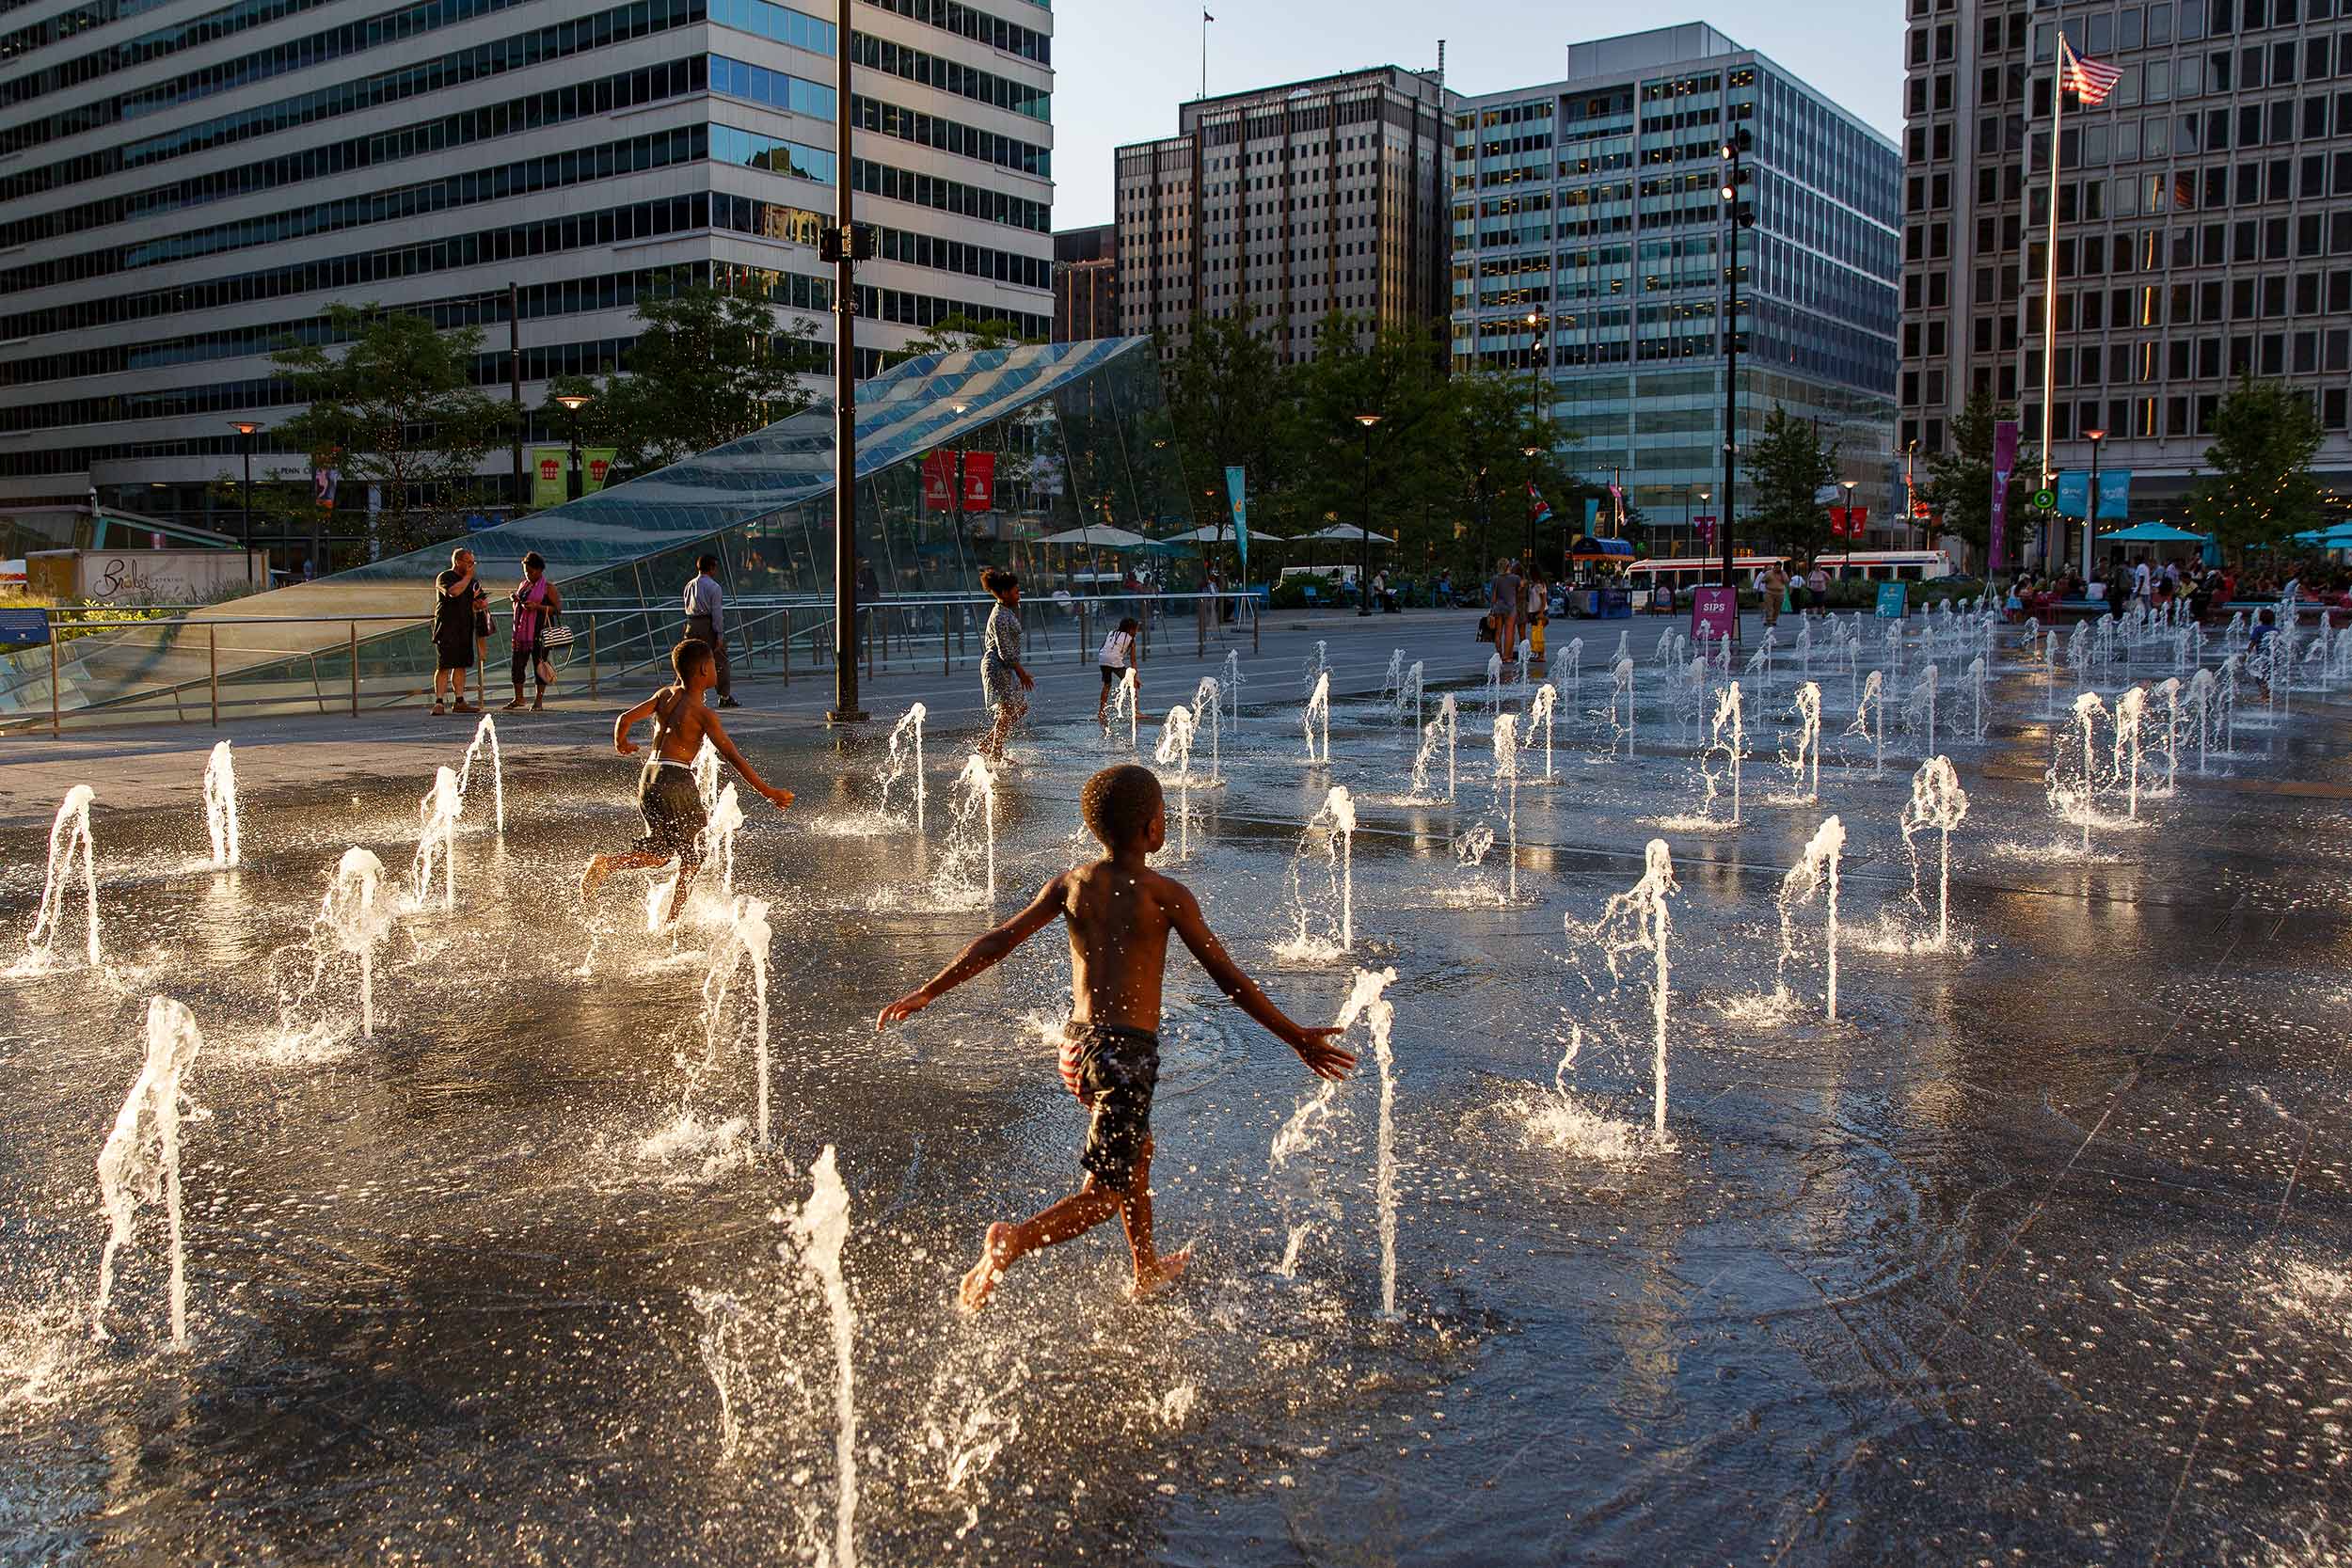 travel_philadelphia_dilworth_fountains_children_play-7972